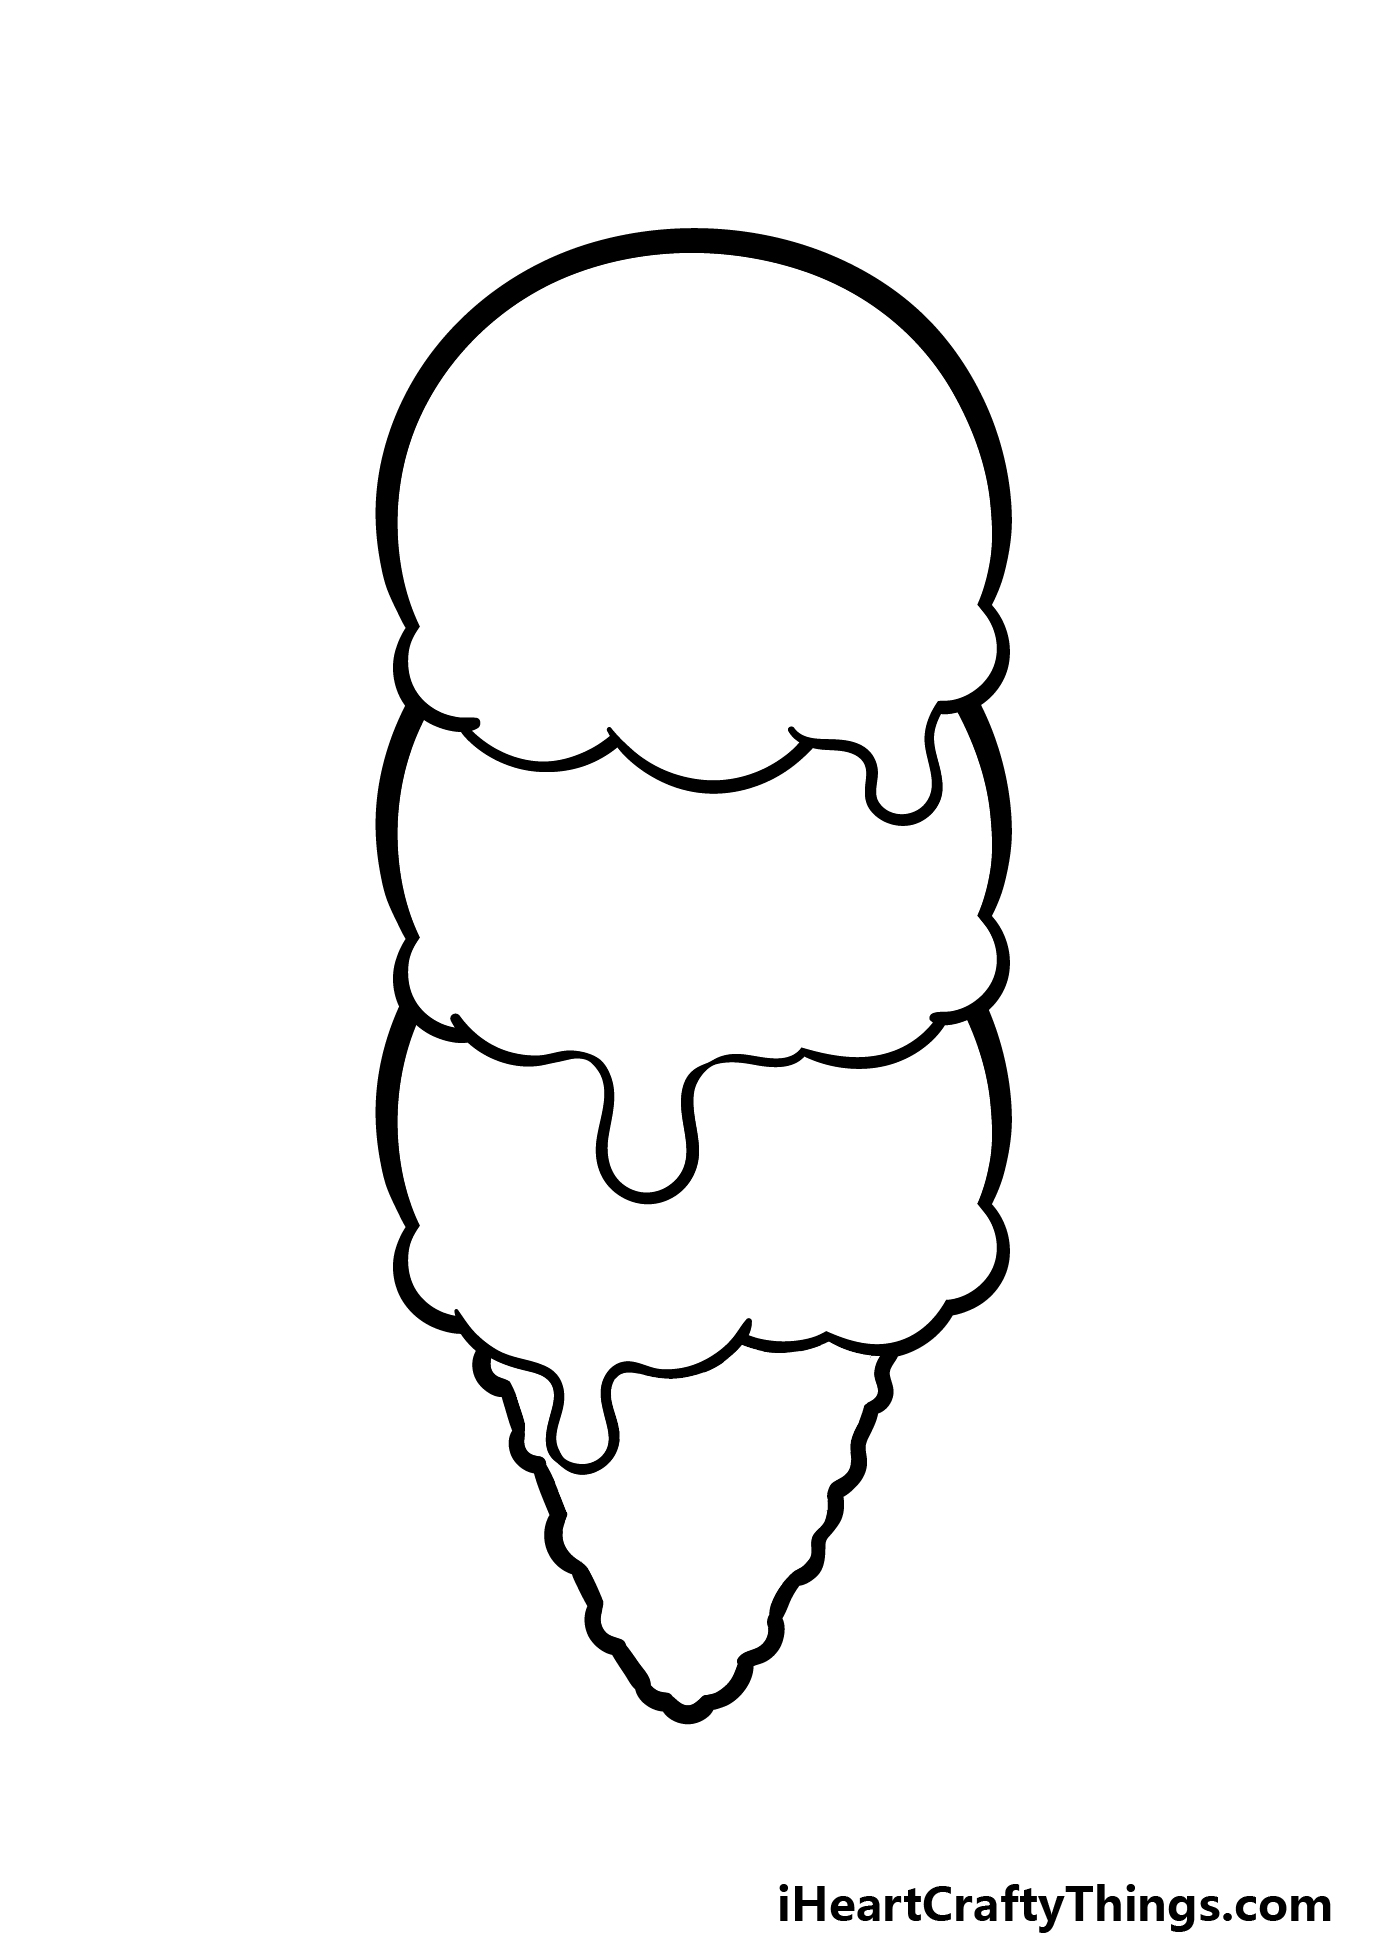 Cartoon Ice Cream Drawing - How To Draw A Cartoon Ice Cream Step By Step